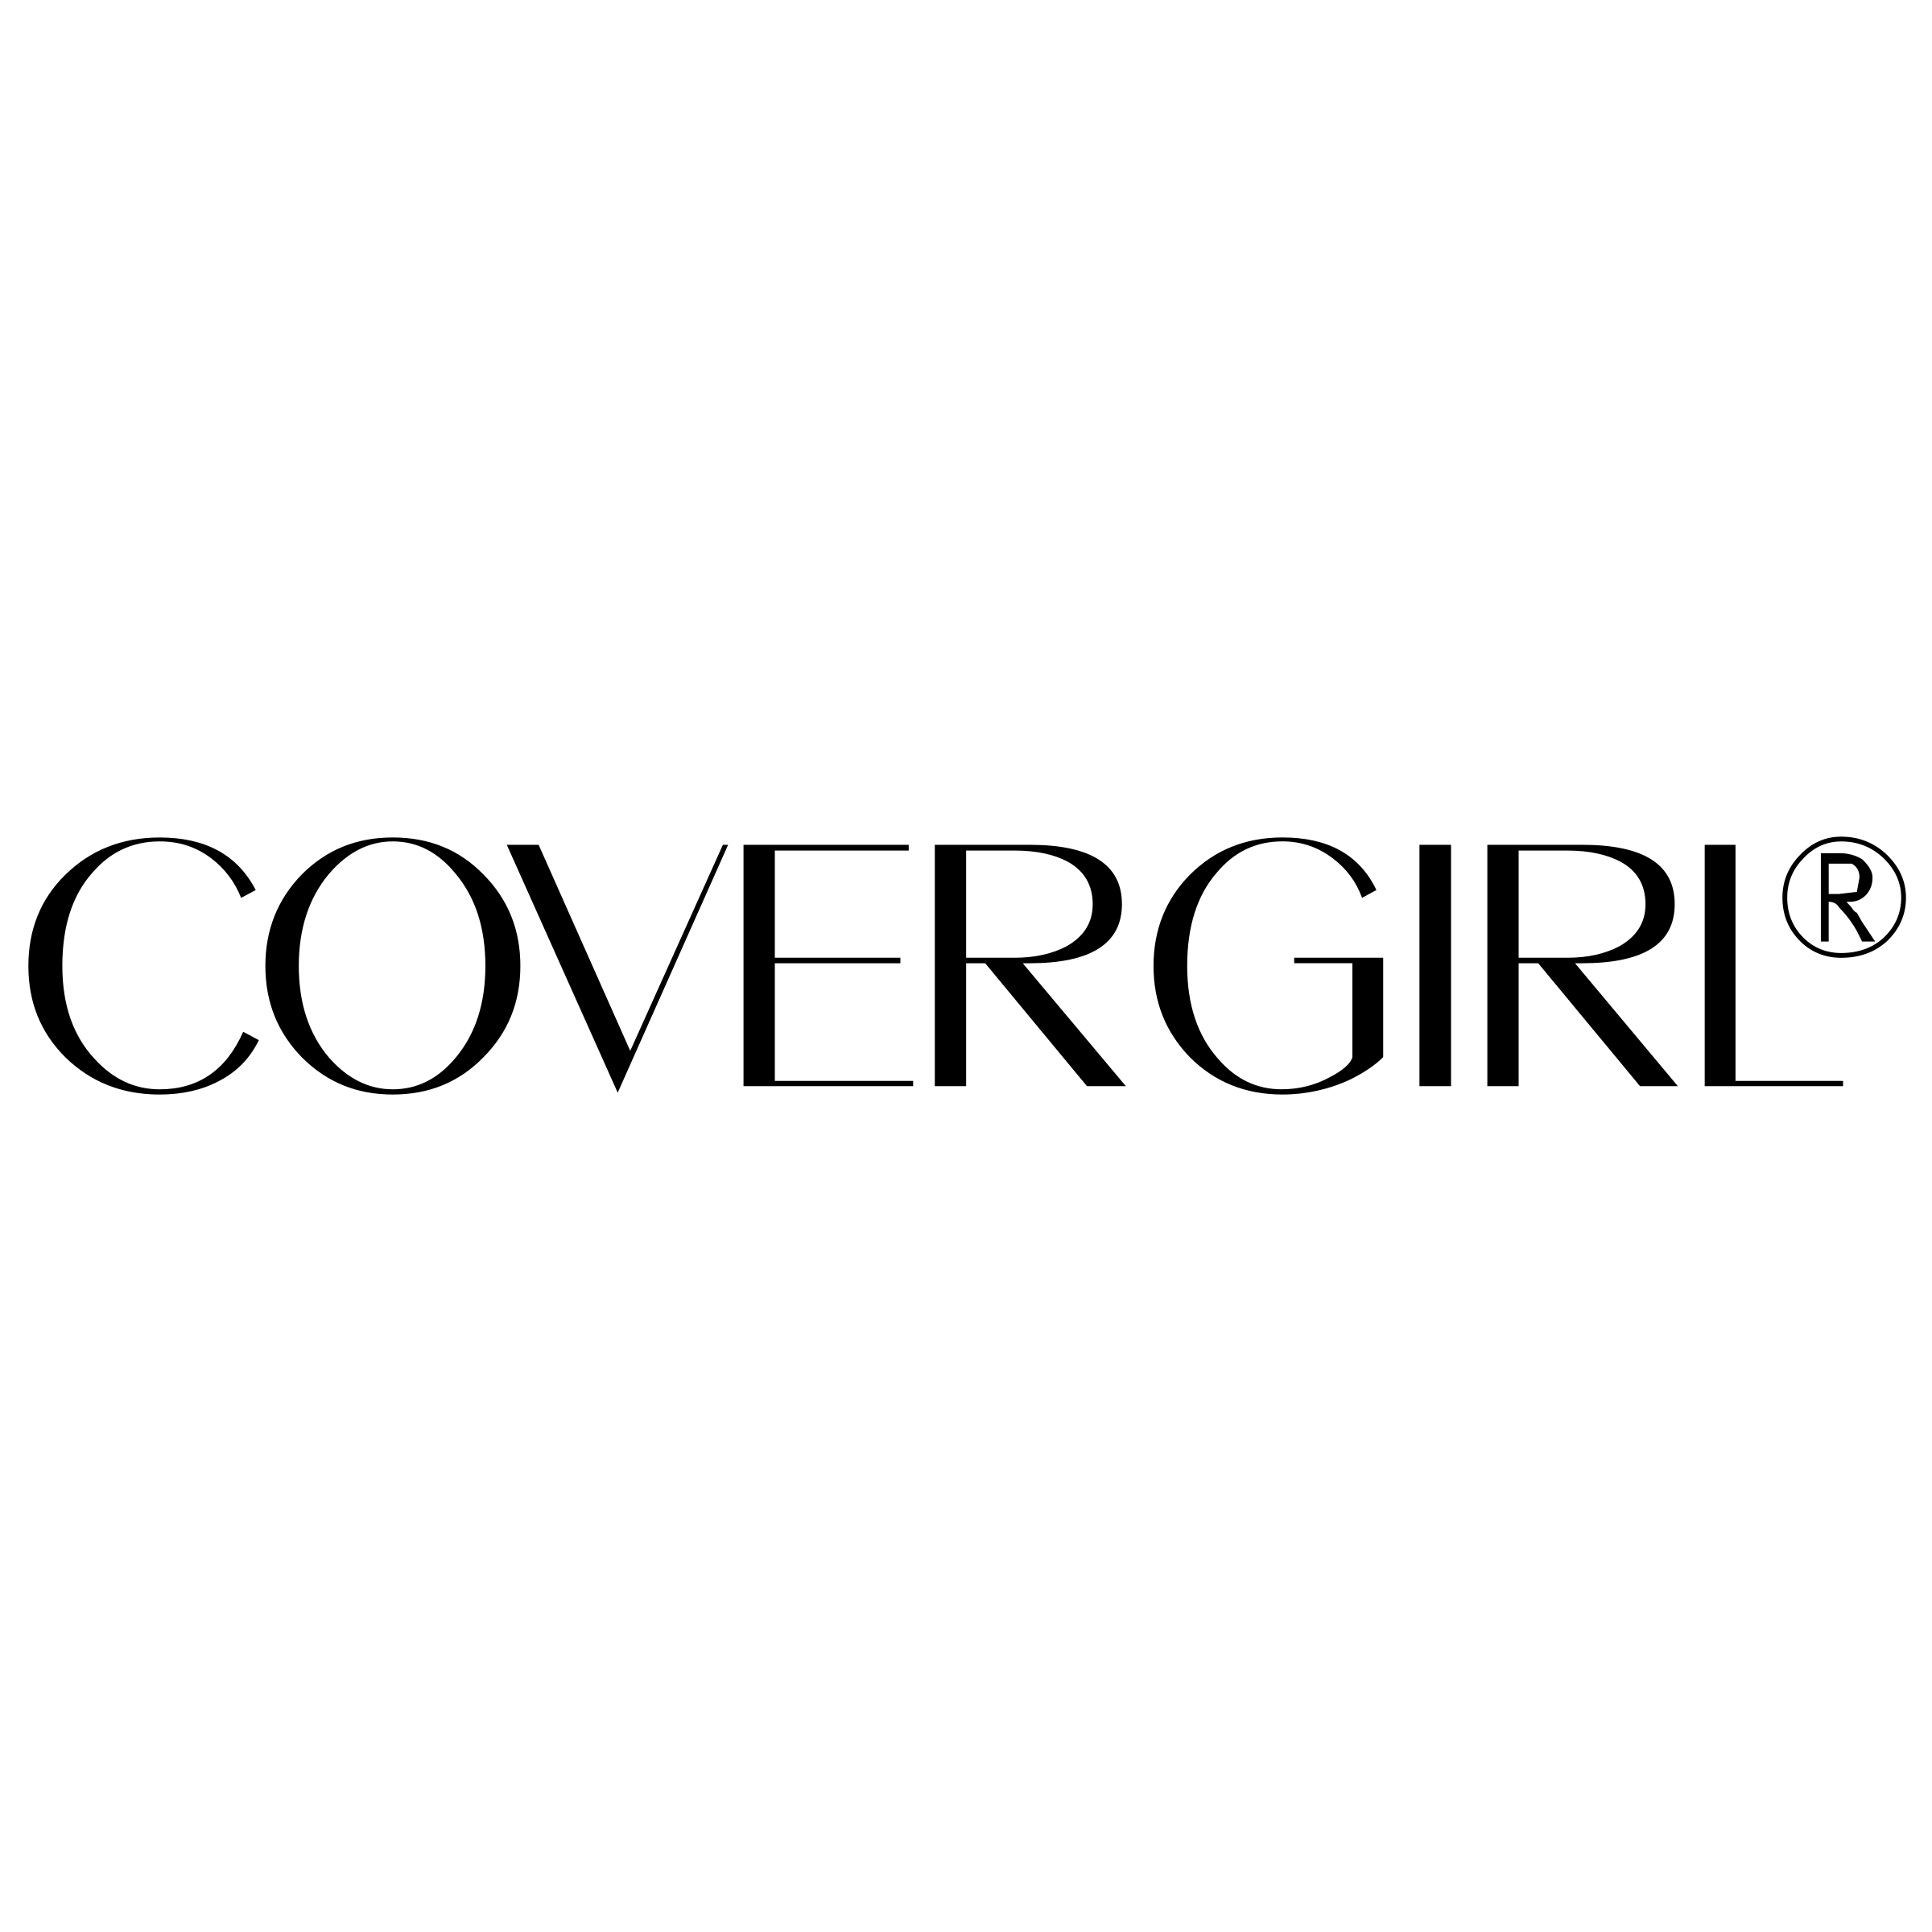 Covergirl Logo - Covergirl Logo PNG Transparent & SVG Vector